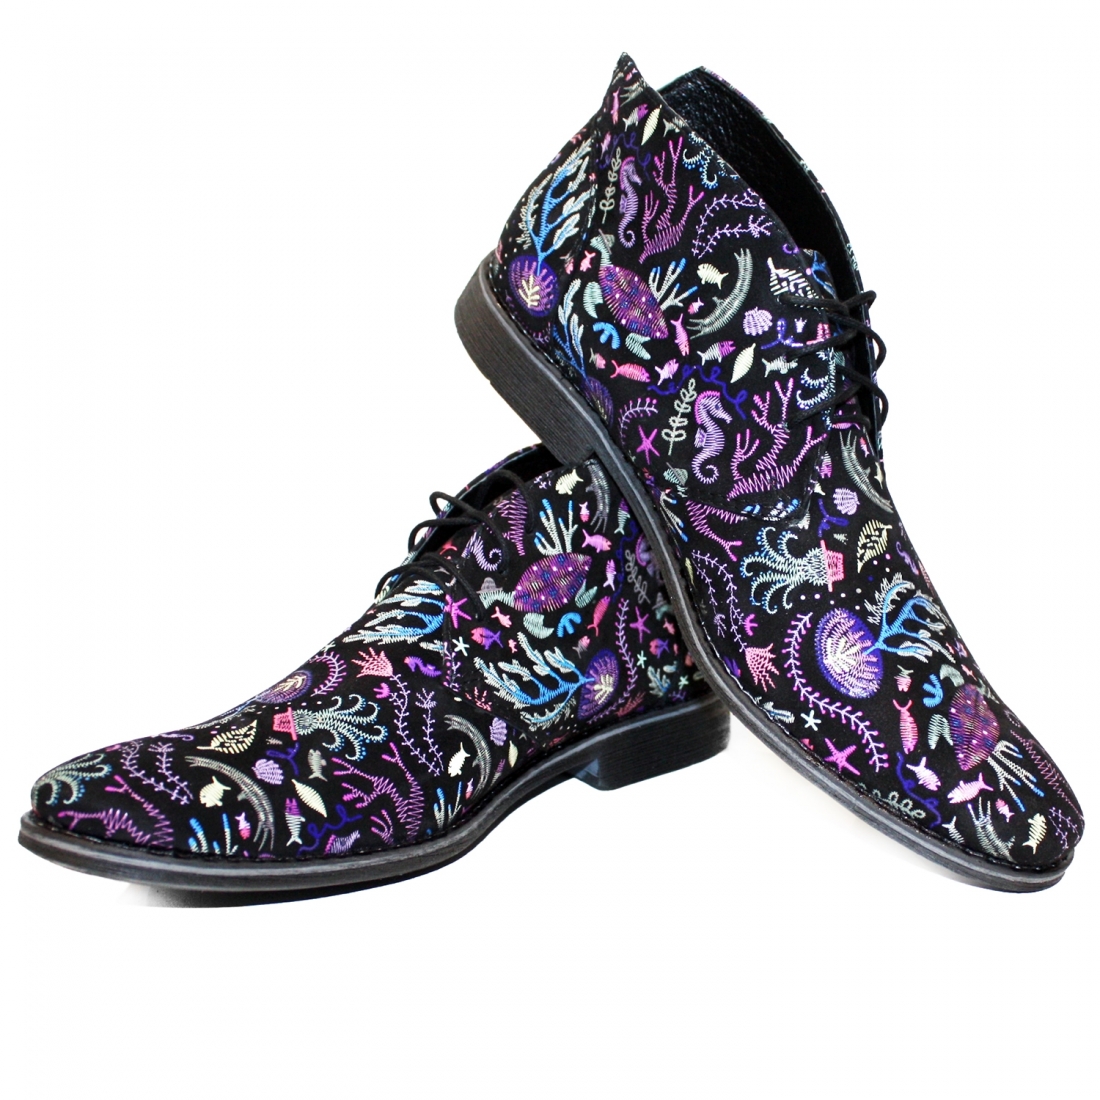 Modello Pesciro - Chukka Boots - Handmade Colorful Italian Leather Shoes